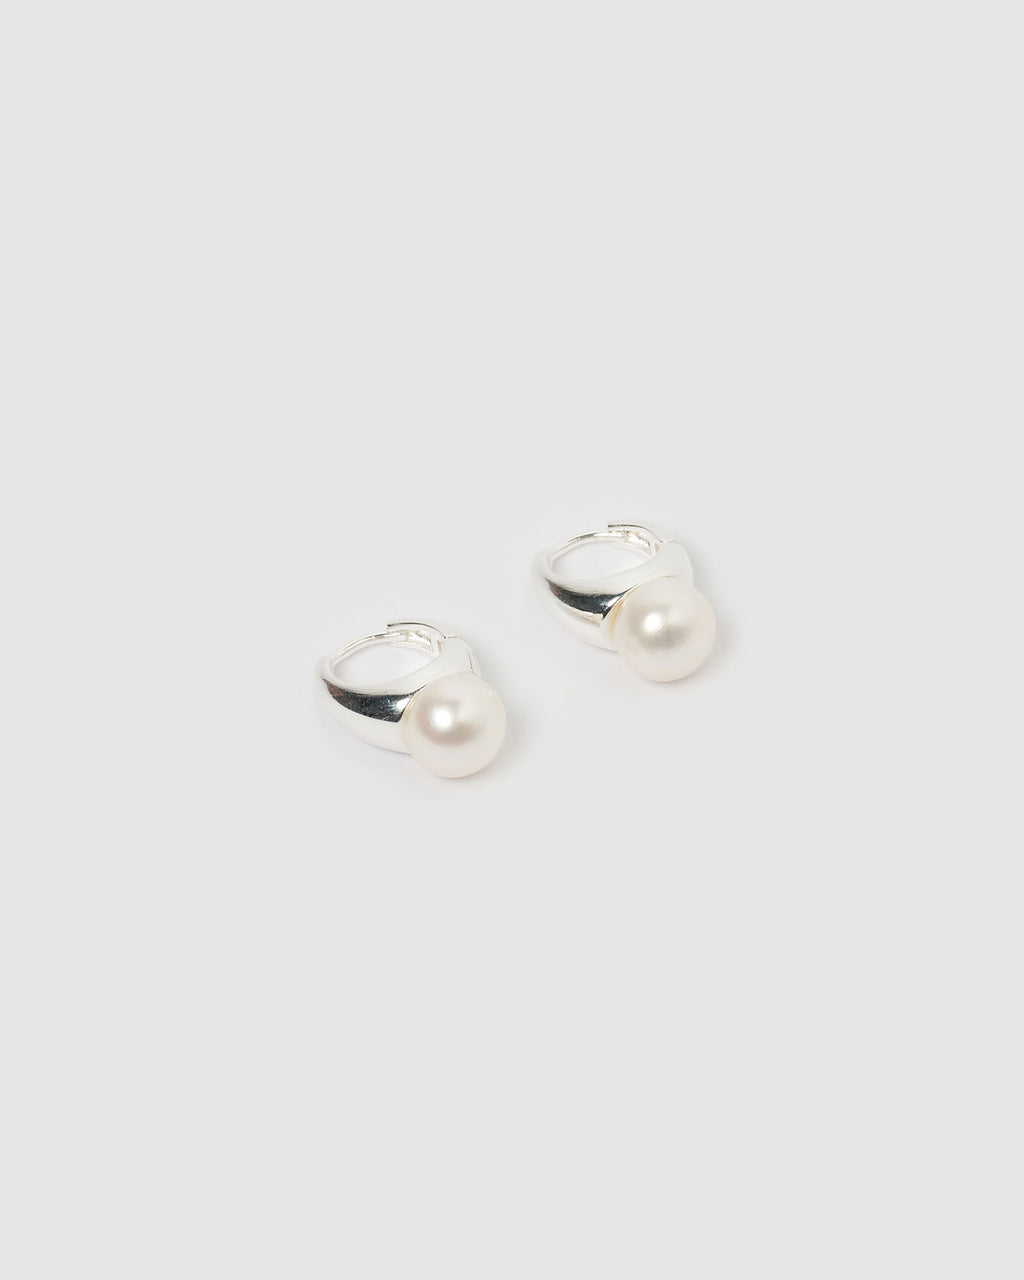 Izoa Haiti Earrings Silver Freshwater Pearl